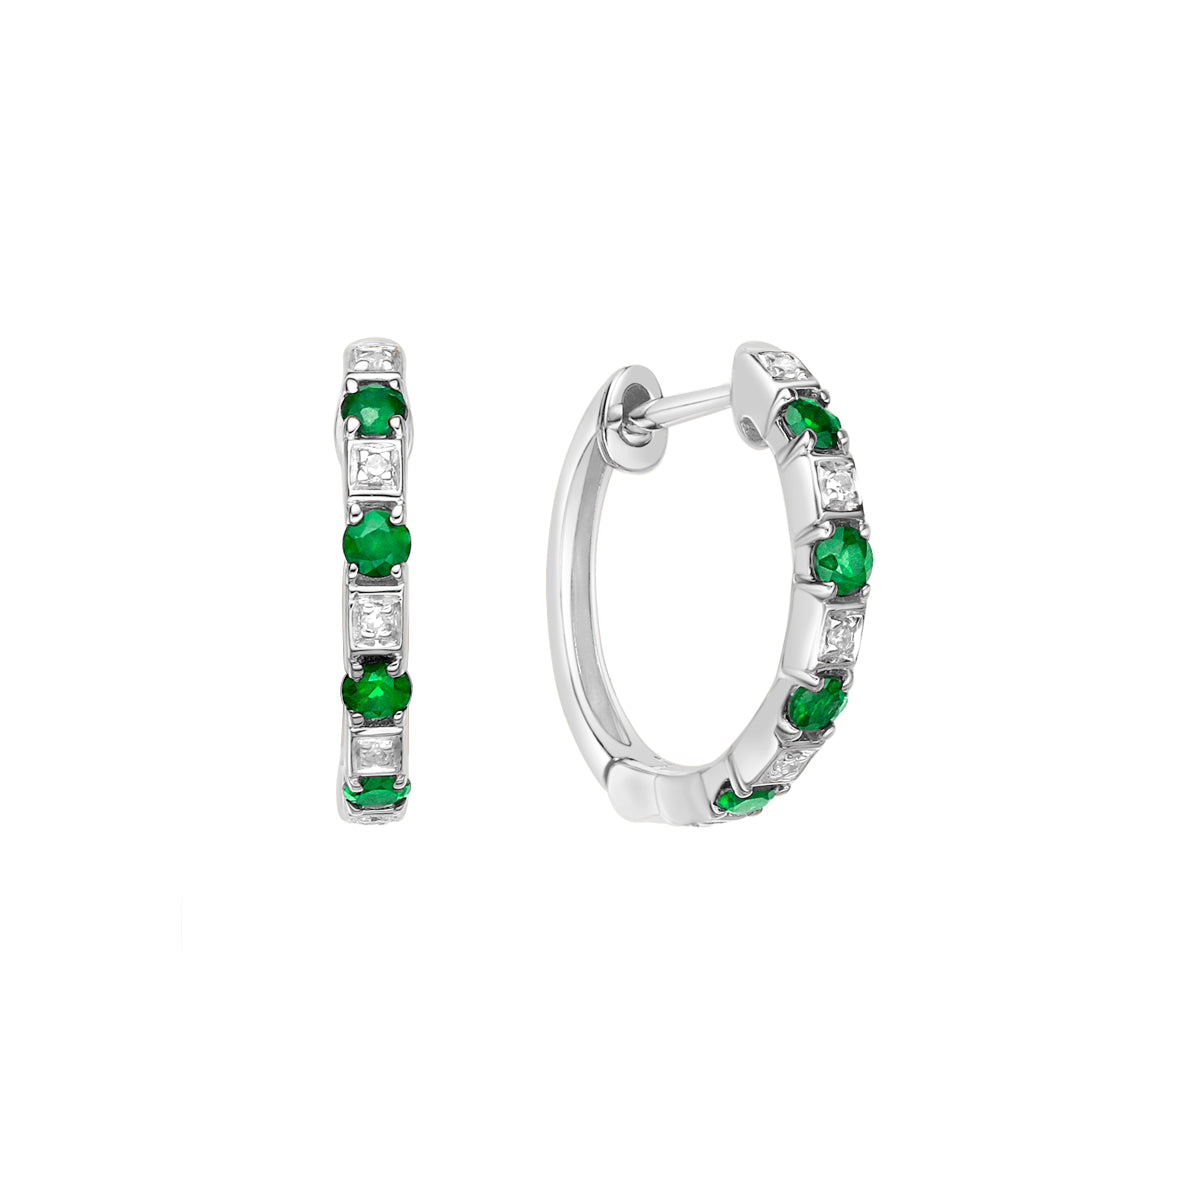 10K White Gold Classic Emerald &amp; Diamond Hoop Earrings 0.04cttw